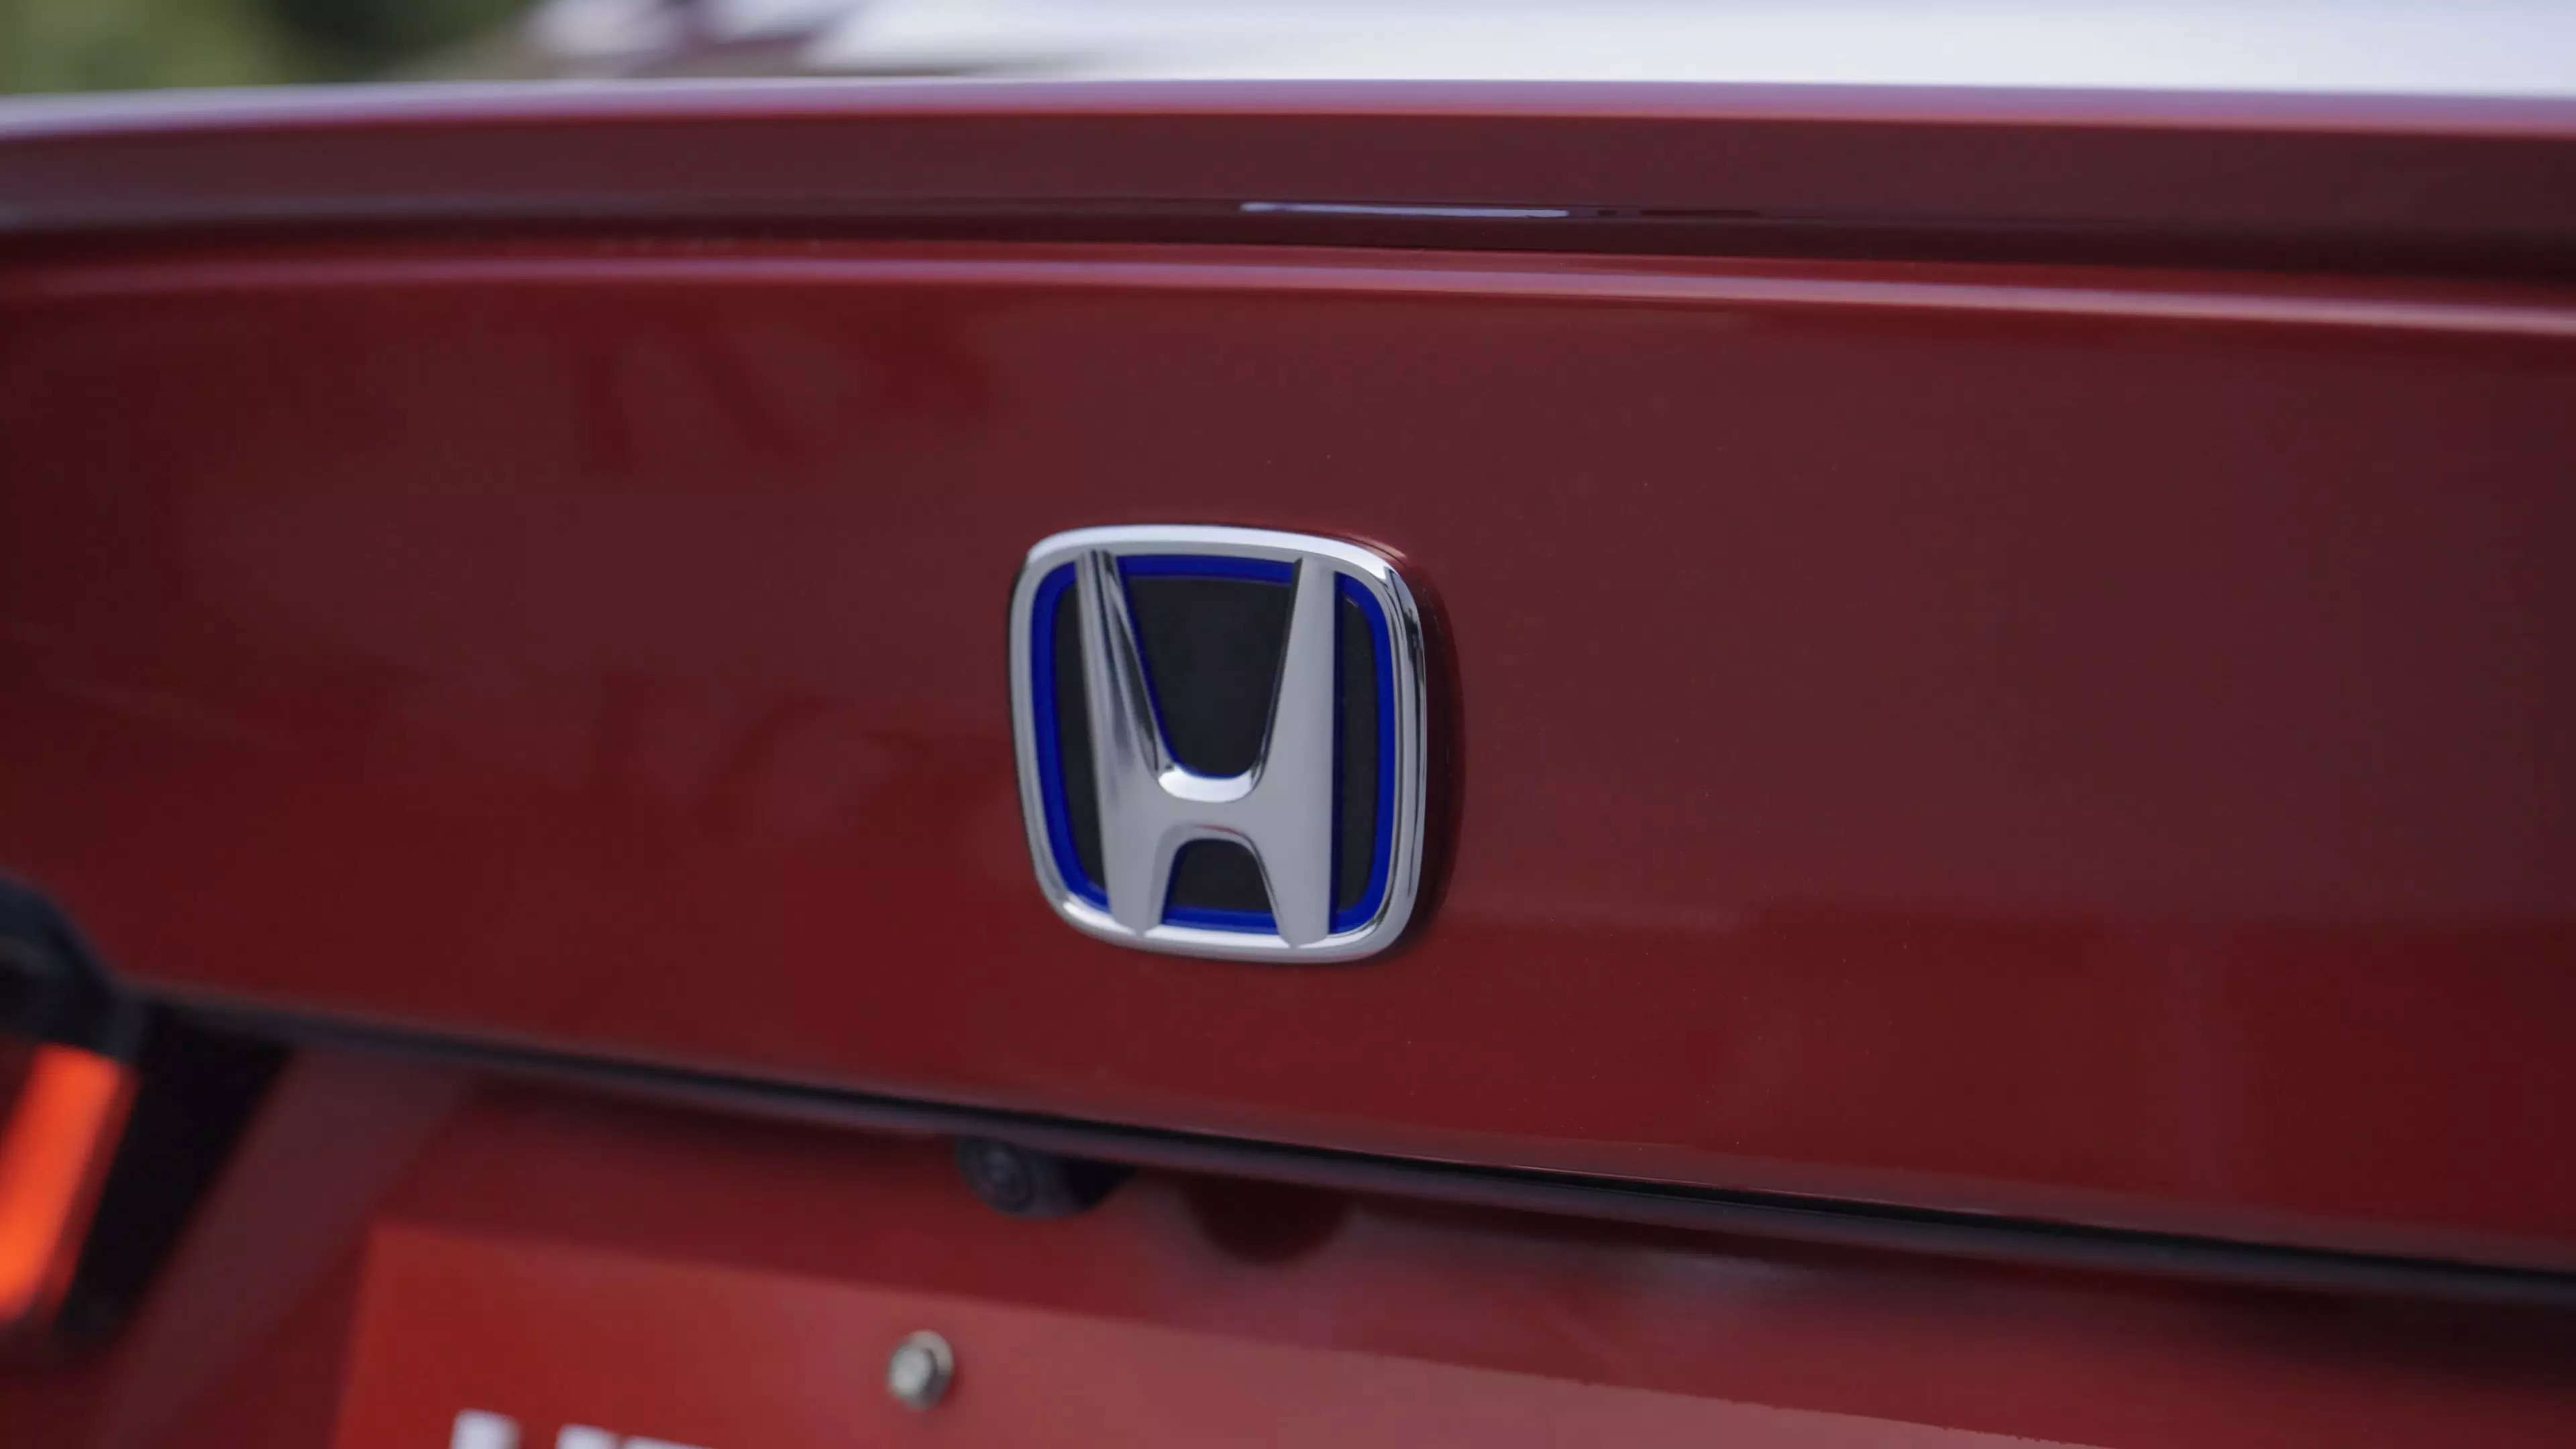  The Honda logo gets a blue tinge similar to the Toyota hybrids